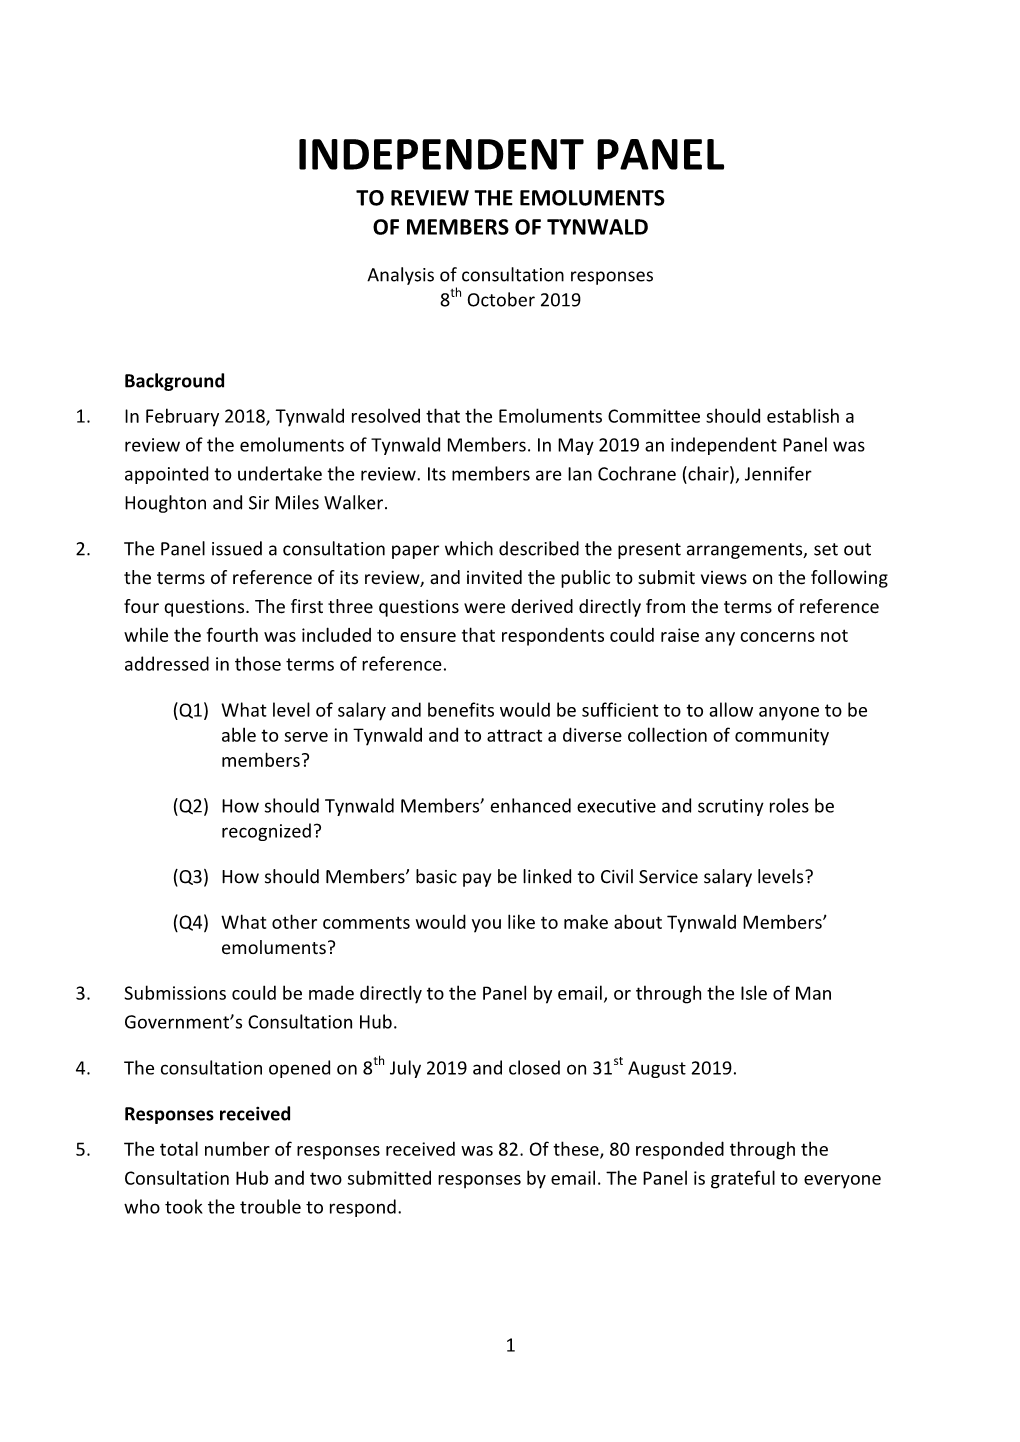 Tynwald Emoluments Analysis of Consultation